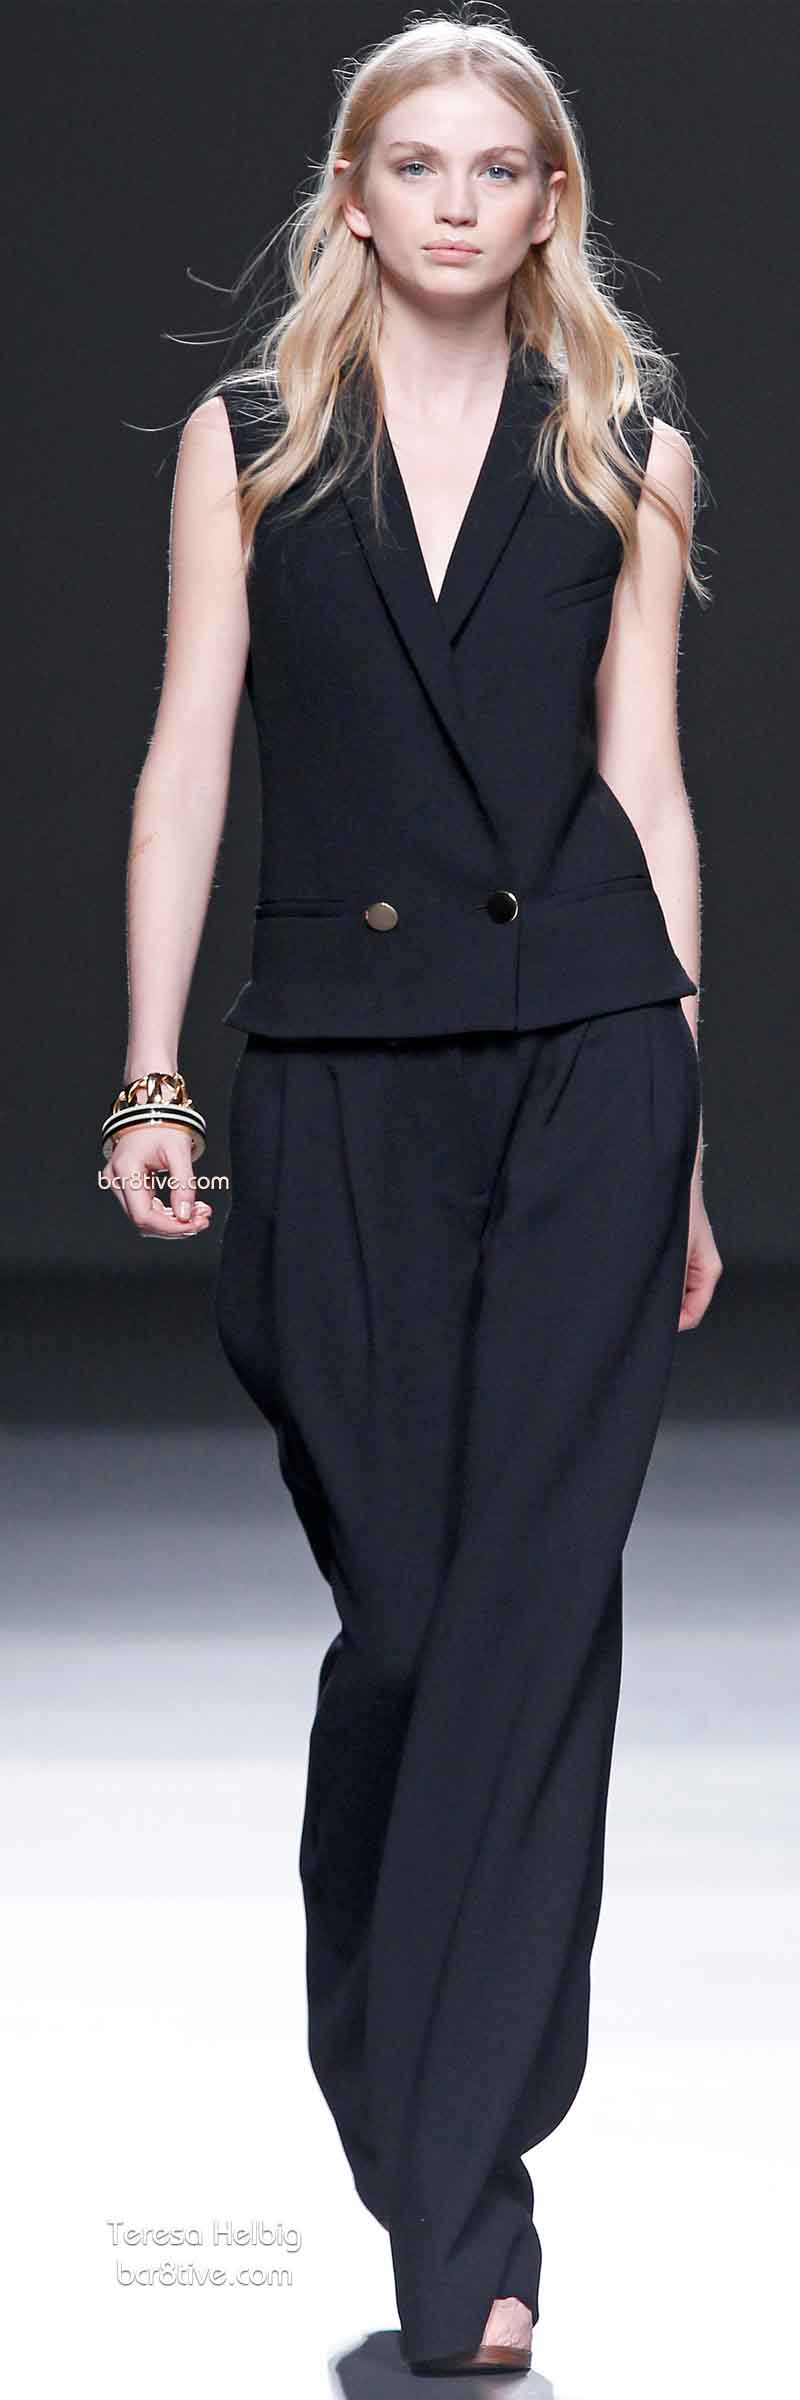 Fall 2014 Menswear Inspired Fashion - Teresa Helbig